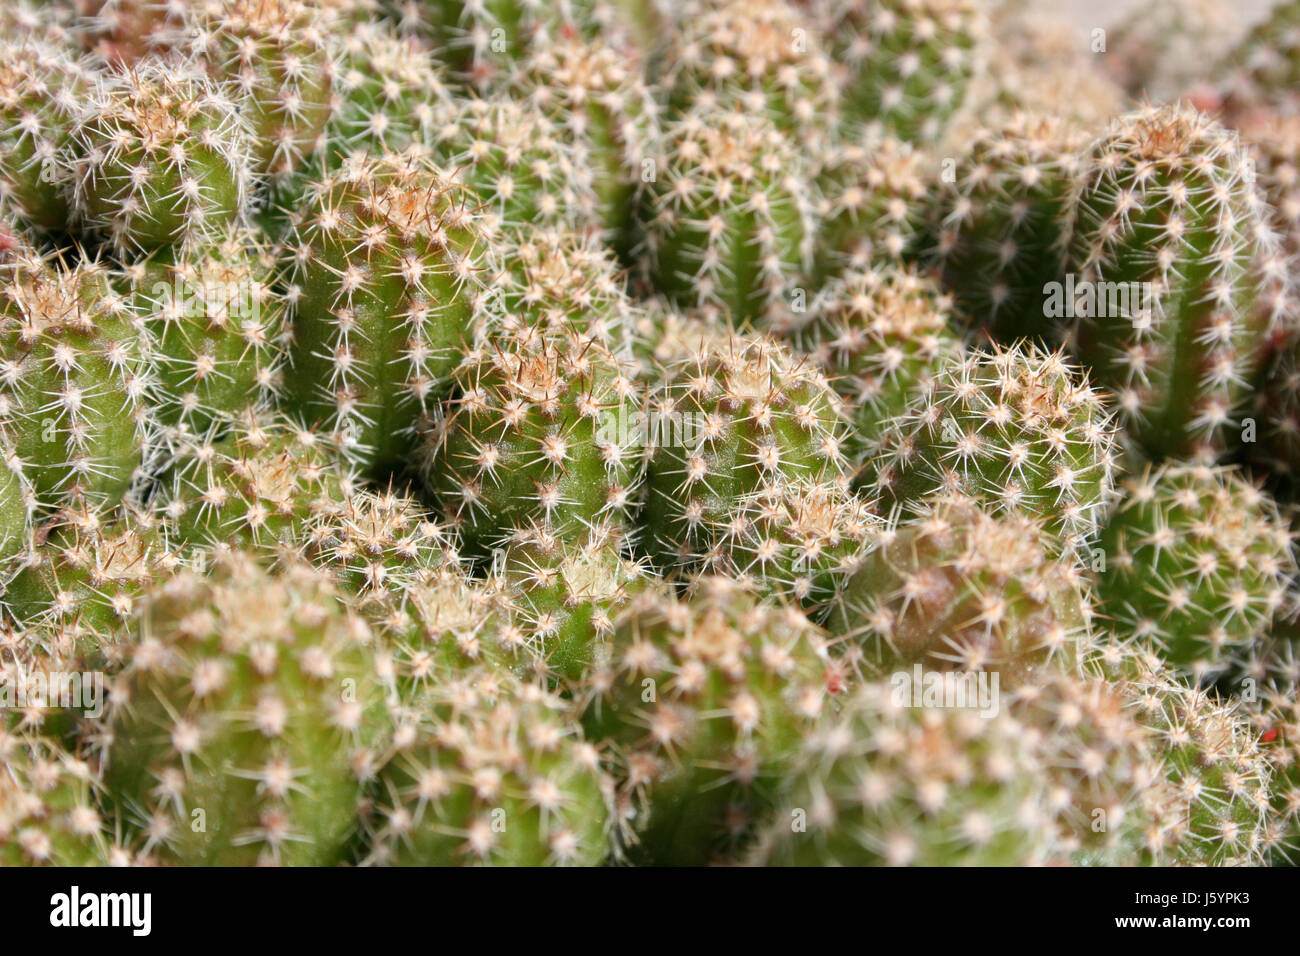 cacti cactus sting desert wasteland green prickle pointed cacti cactus defense Stock Photo